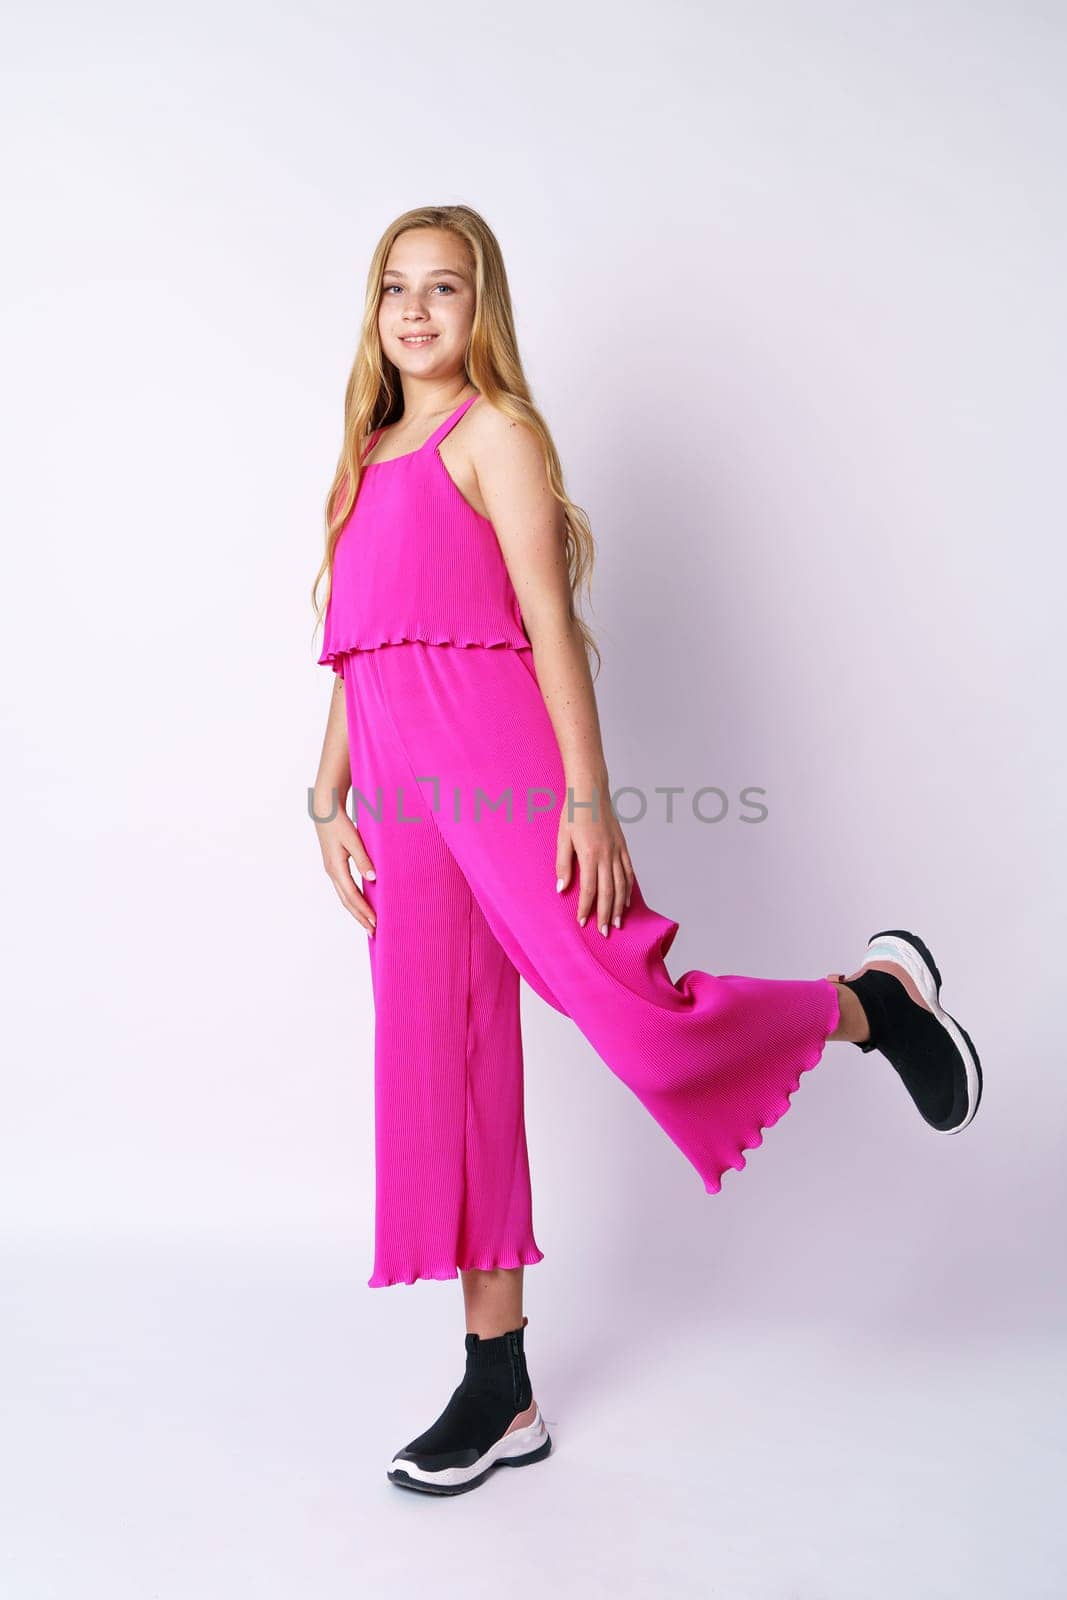 Beautiful teen girl posing in pink on a white background by EkaterinaPereslavtseva